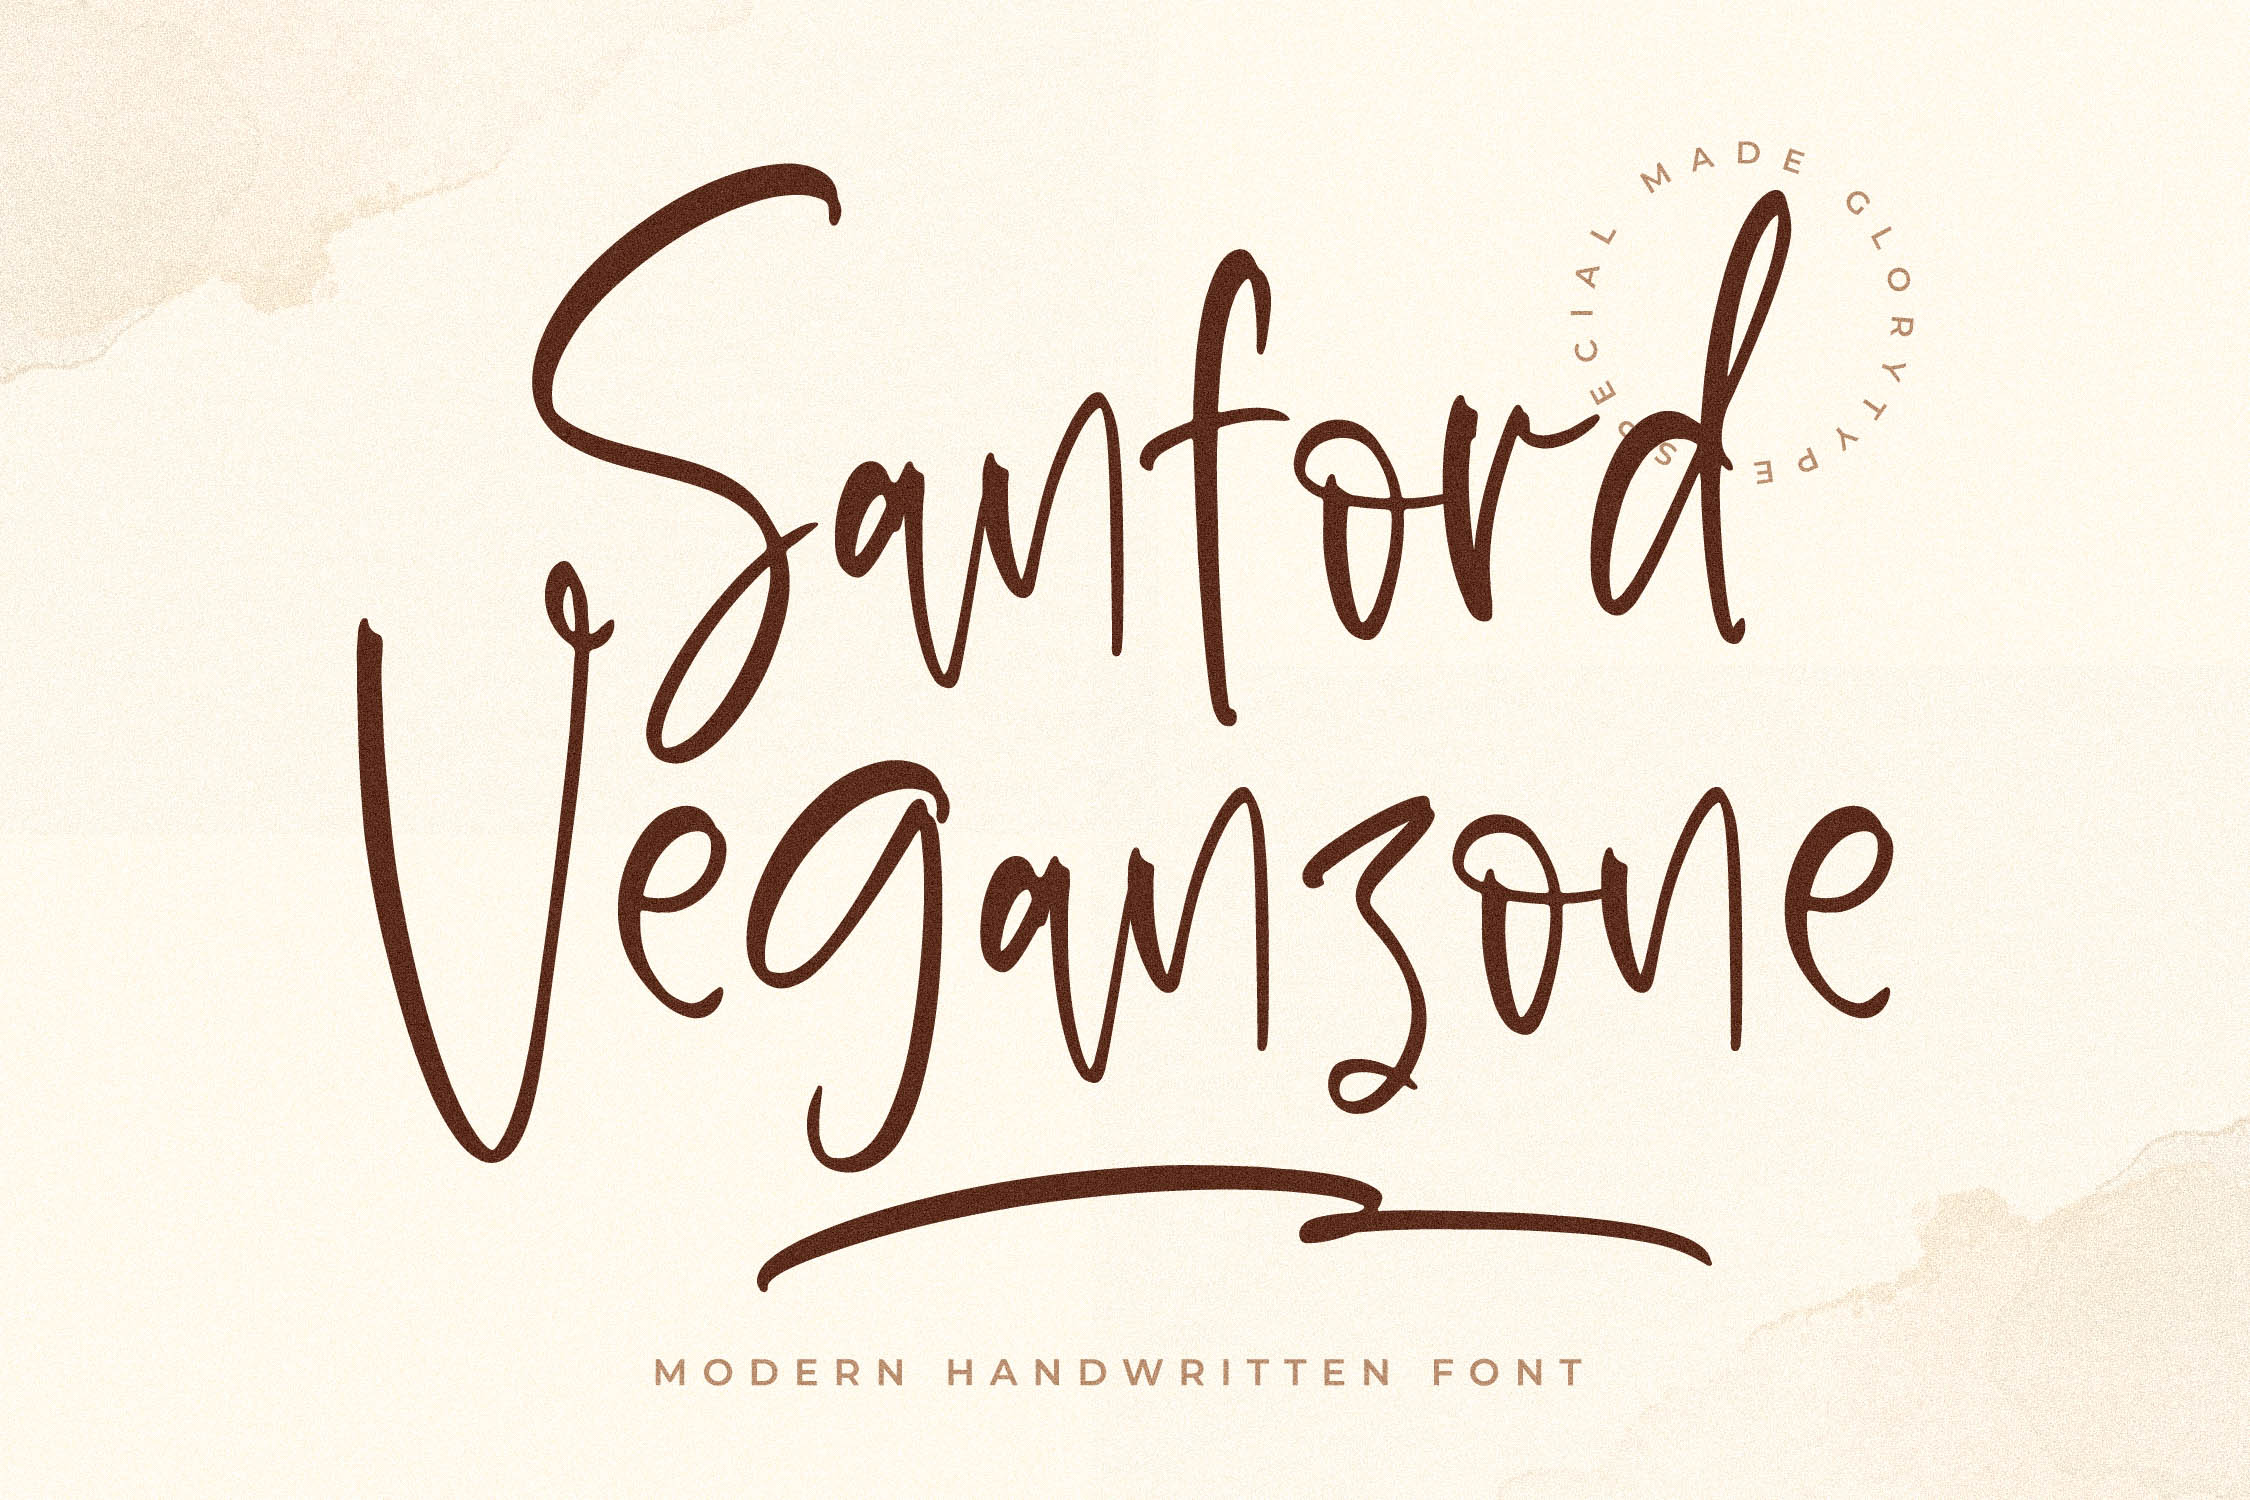 Sanford Veganzone